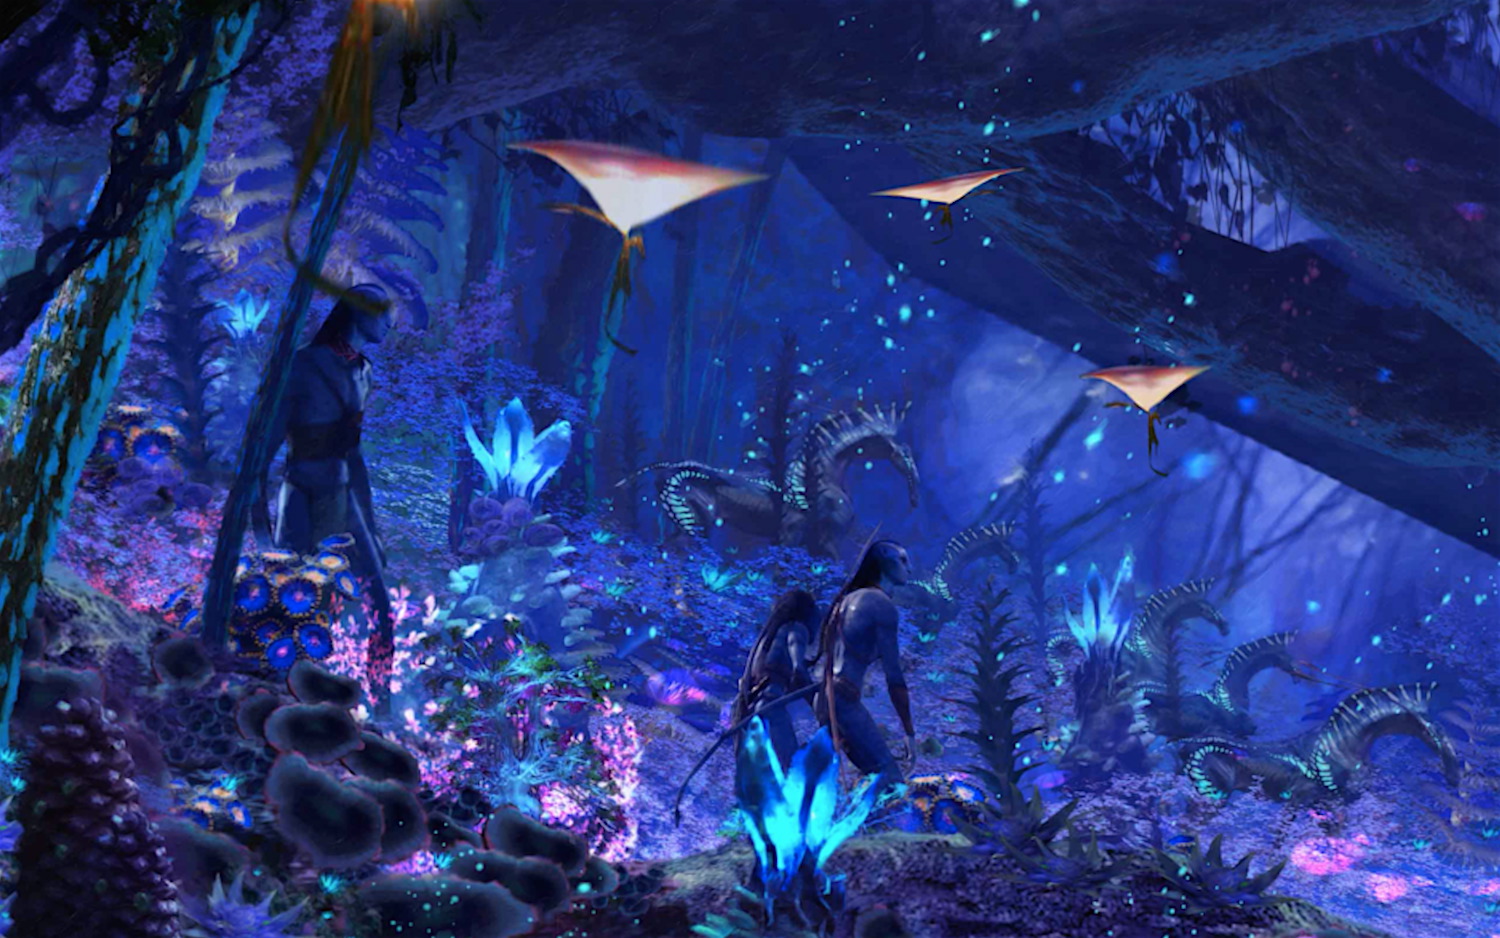 Na’vi River Journey Coming to Pandora – The World of AVATAR at Disney’s Animal Kingdom